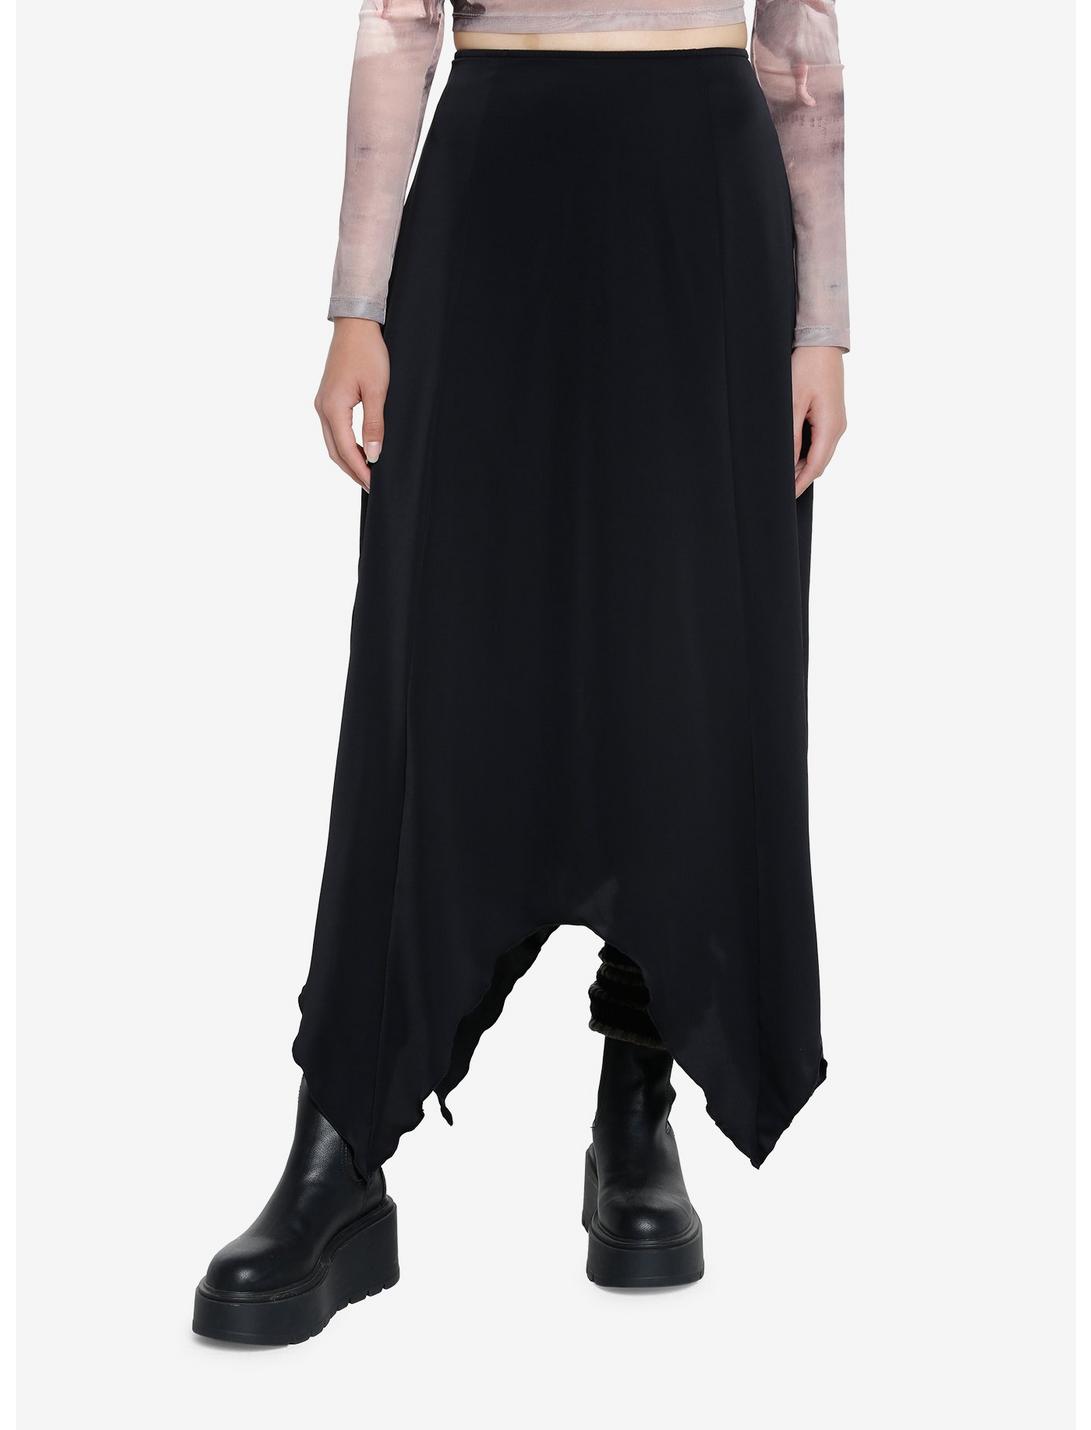 Cosmic Aura Black Hanky Hem Maxi Skirt, BLACK, hi-res